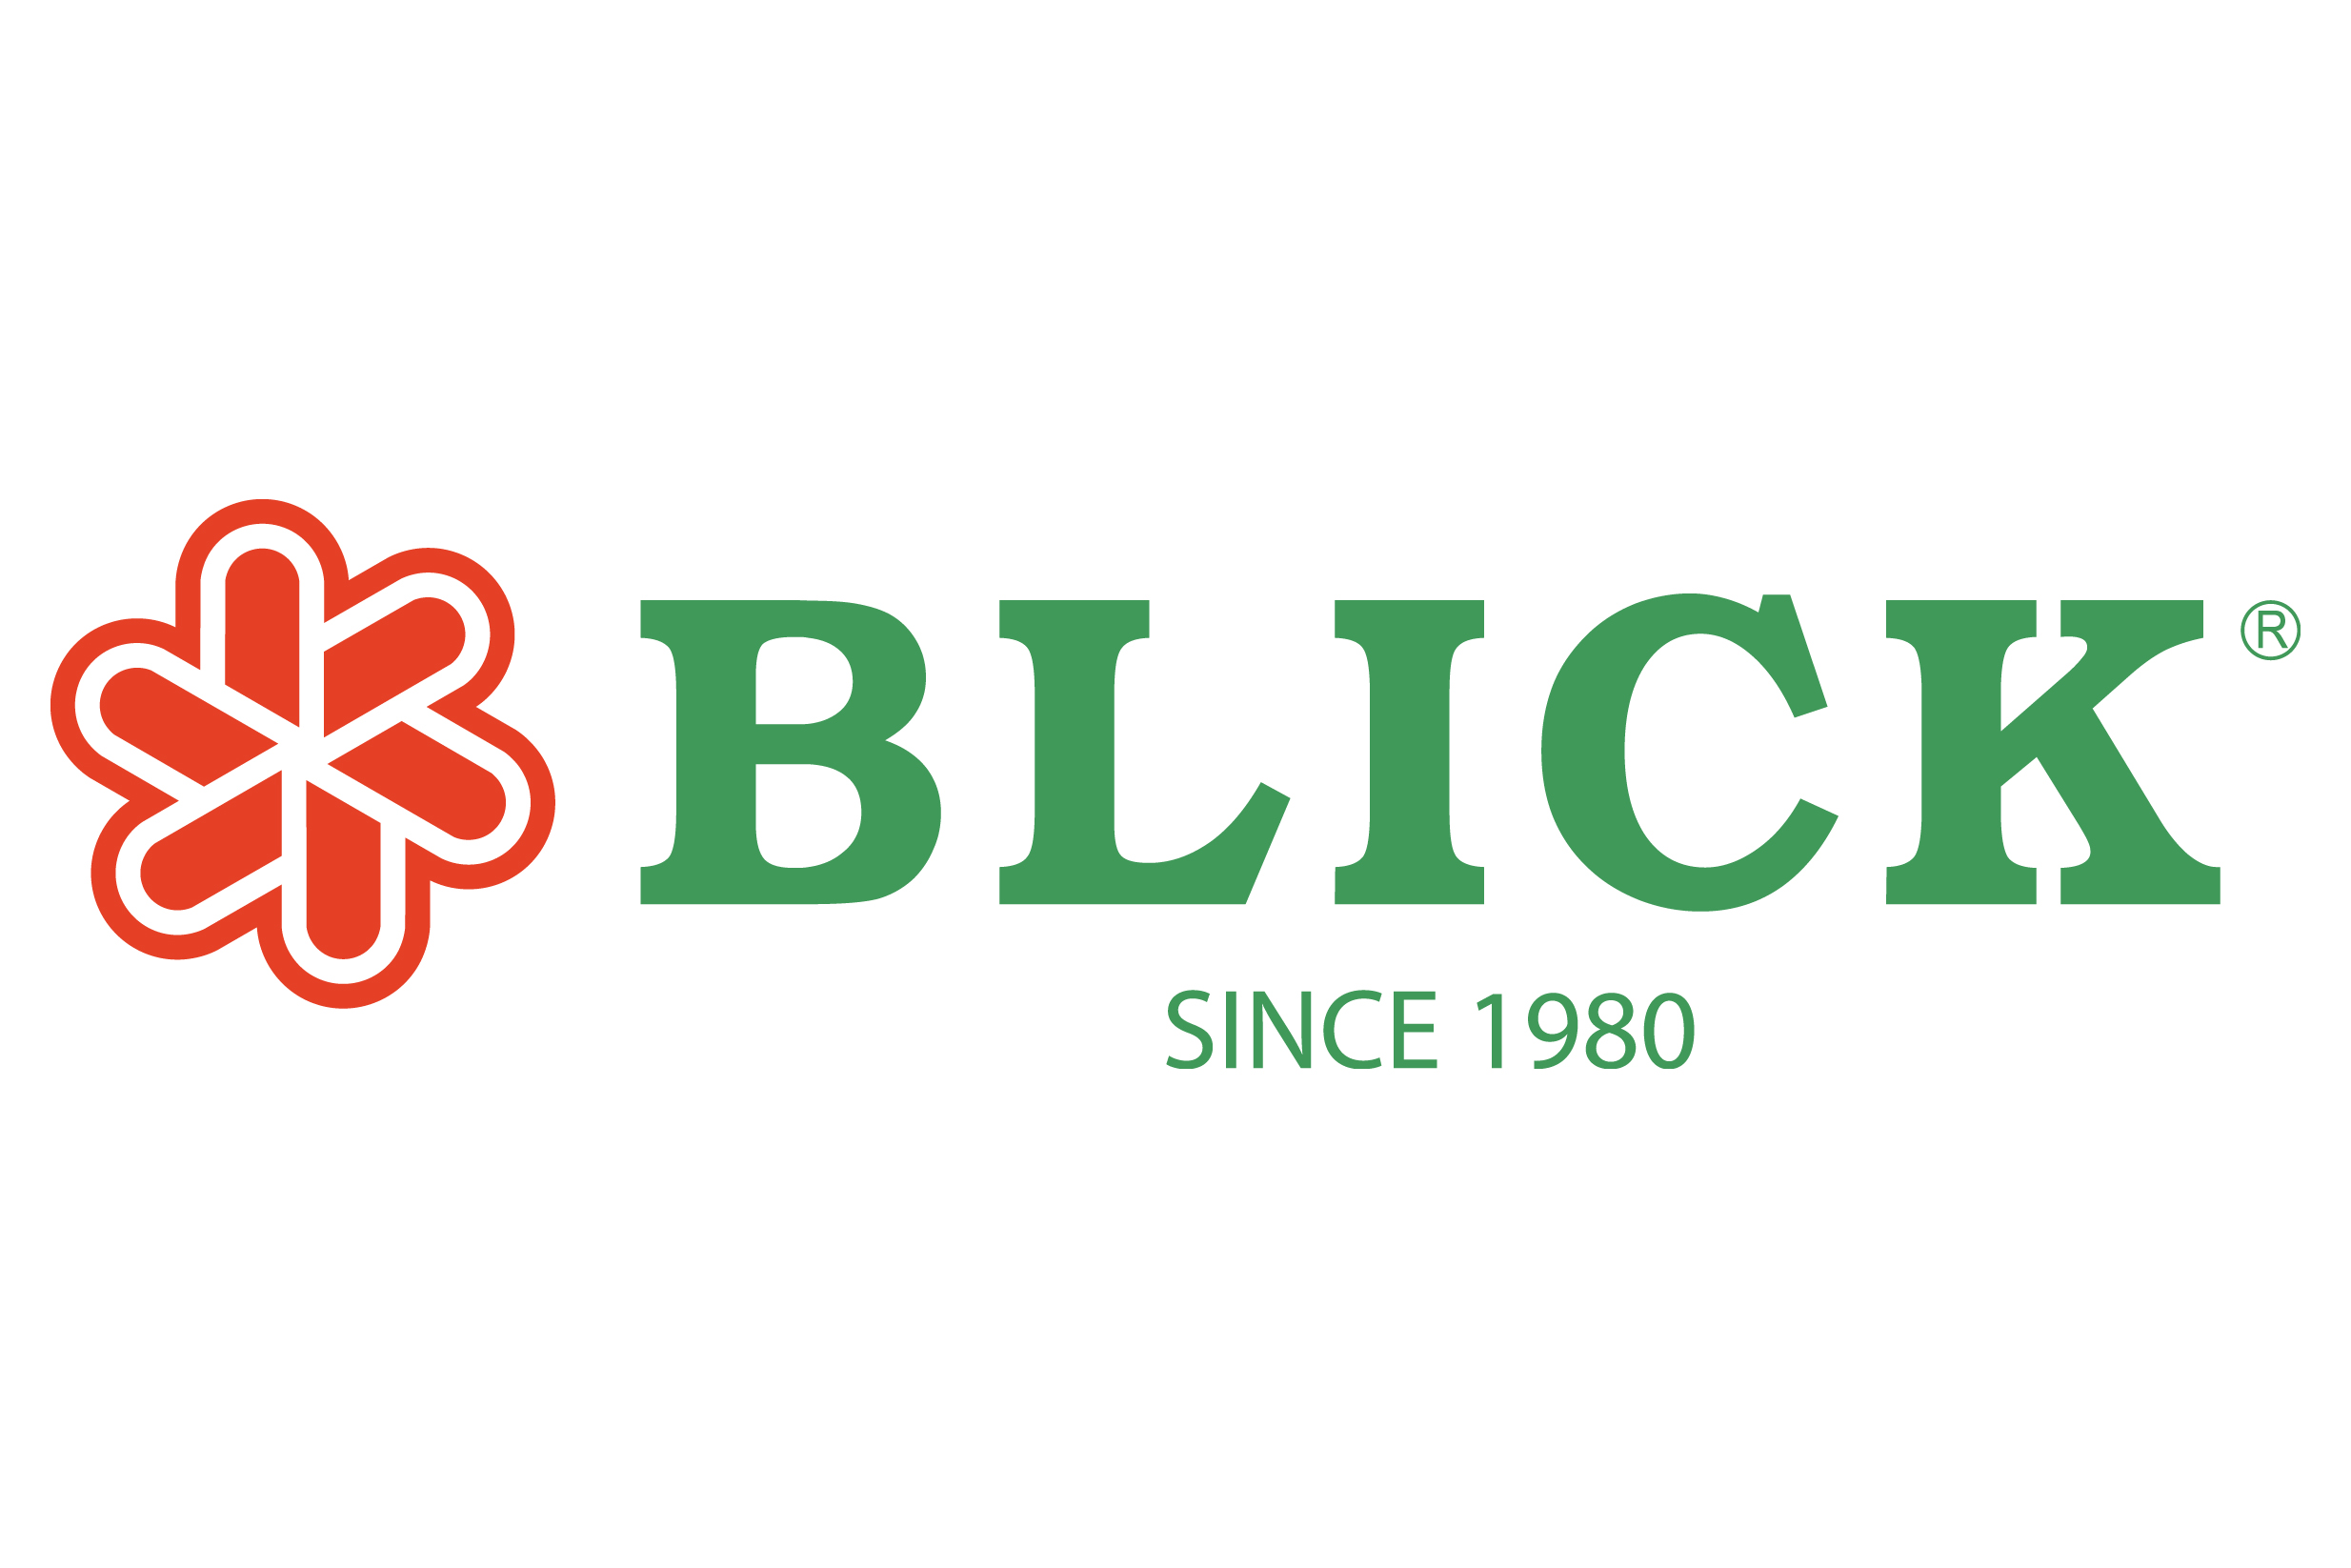 BLICK+SINCE 1980